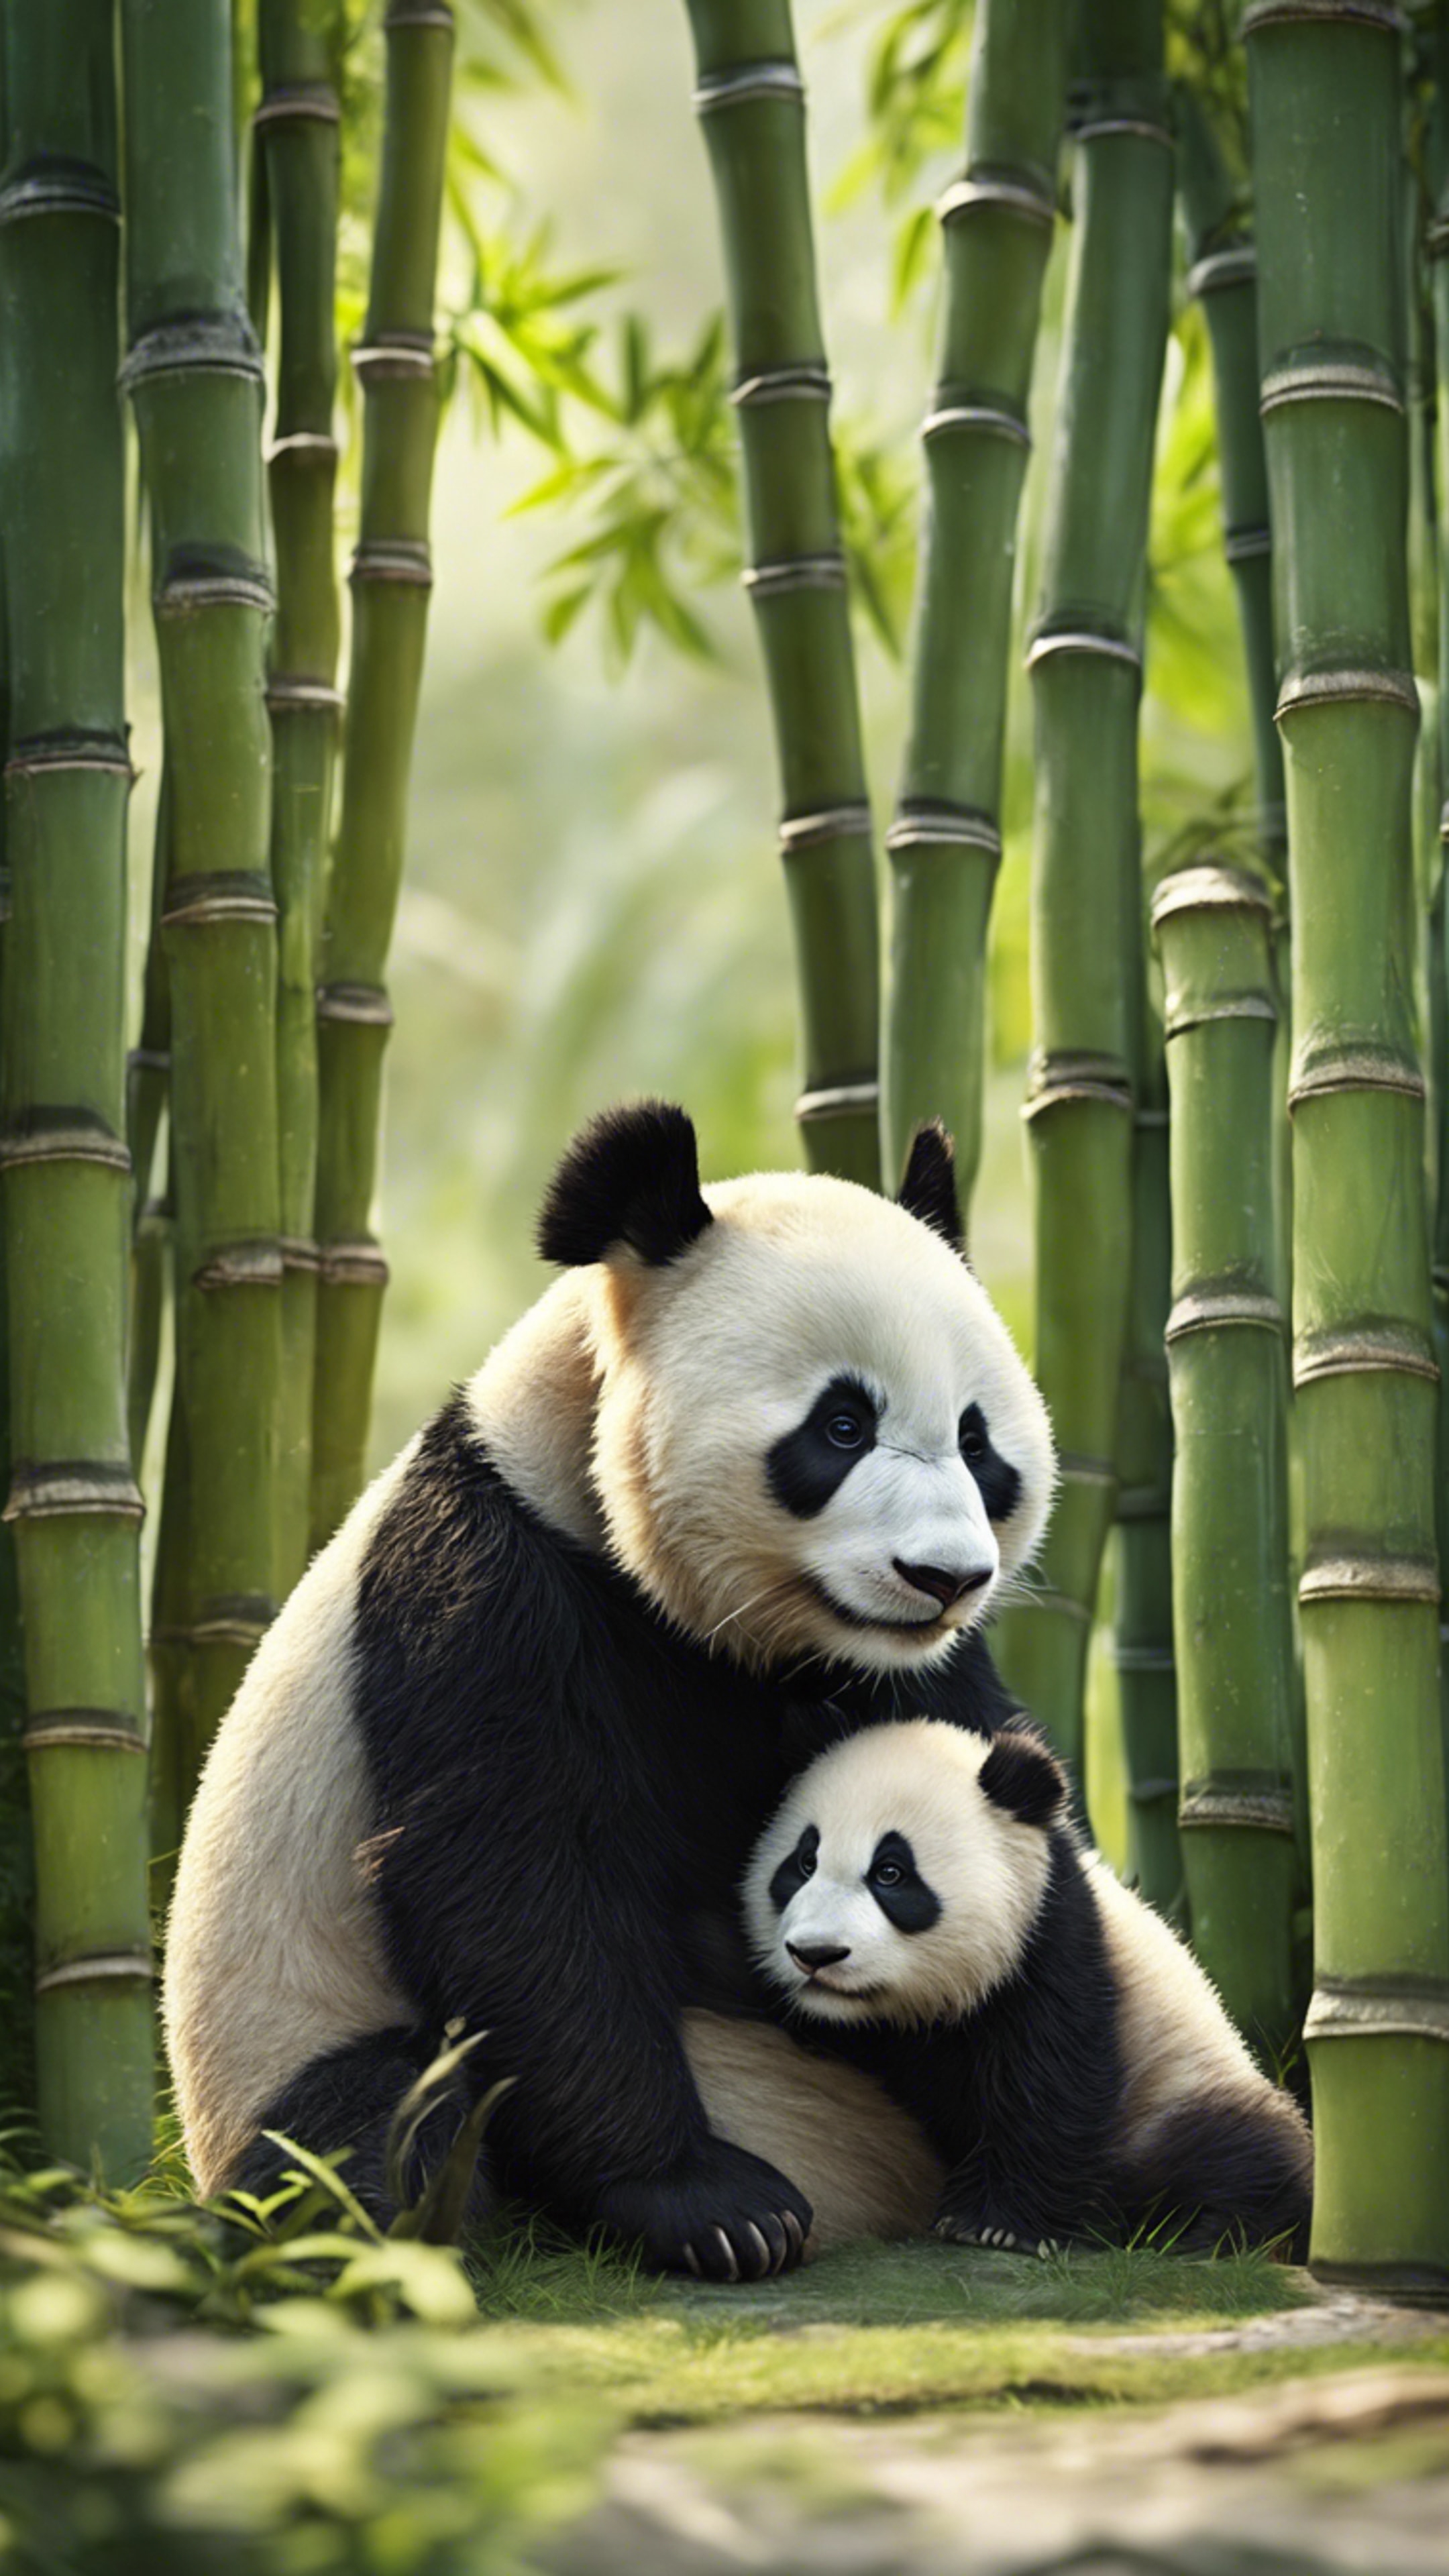 A mother panda teaching her cub to climb a bamboo tree in a tranquil jungle setting. Tapéta[bf956daca53d4d23a107]